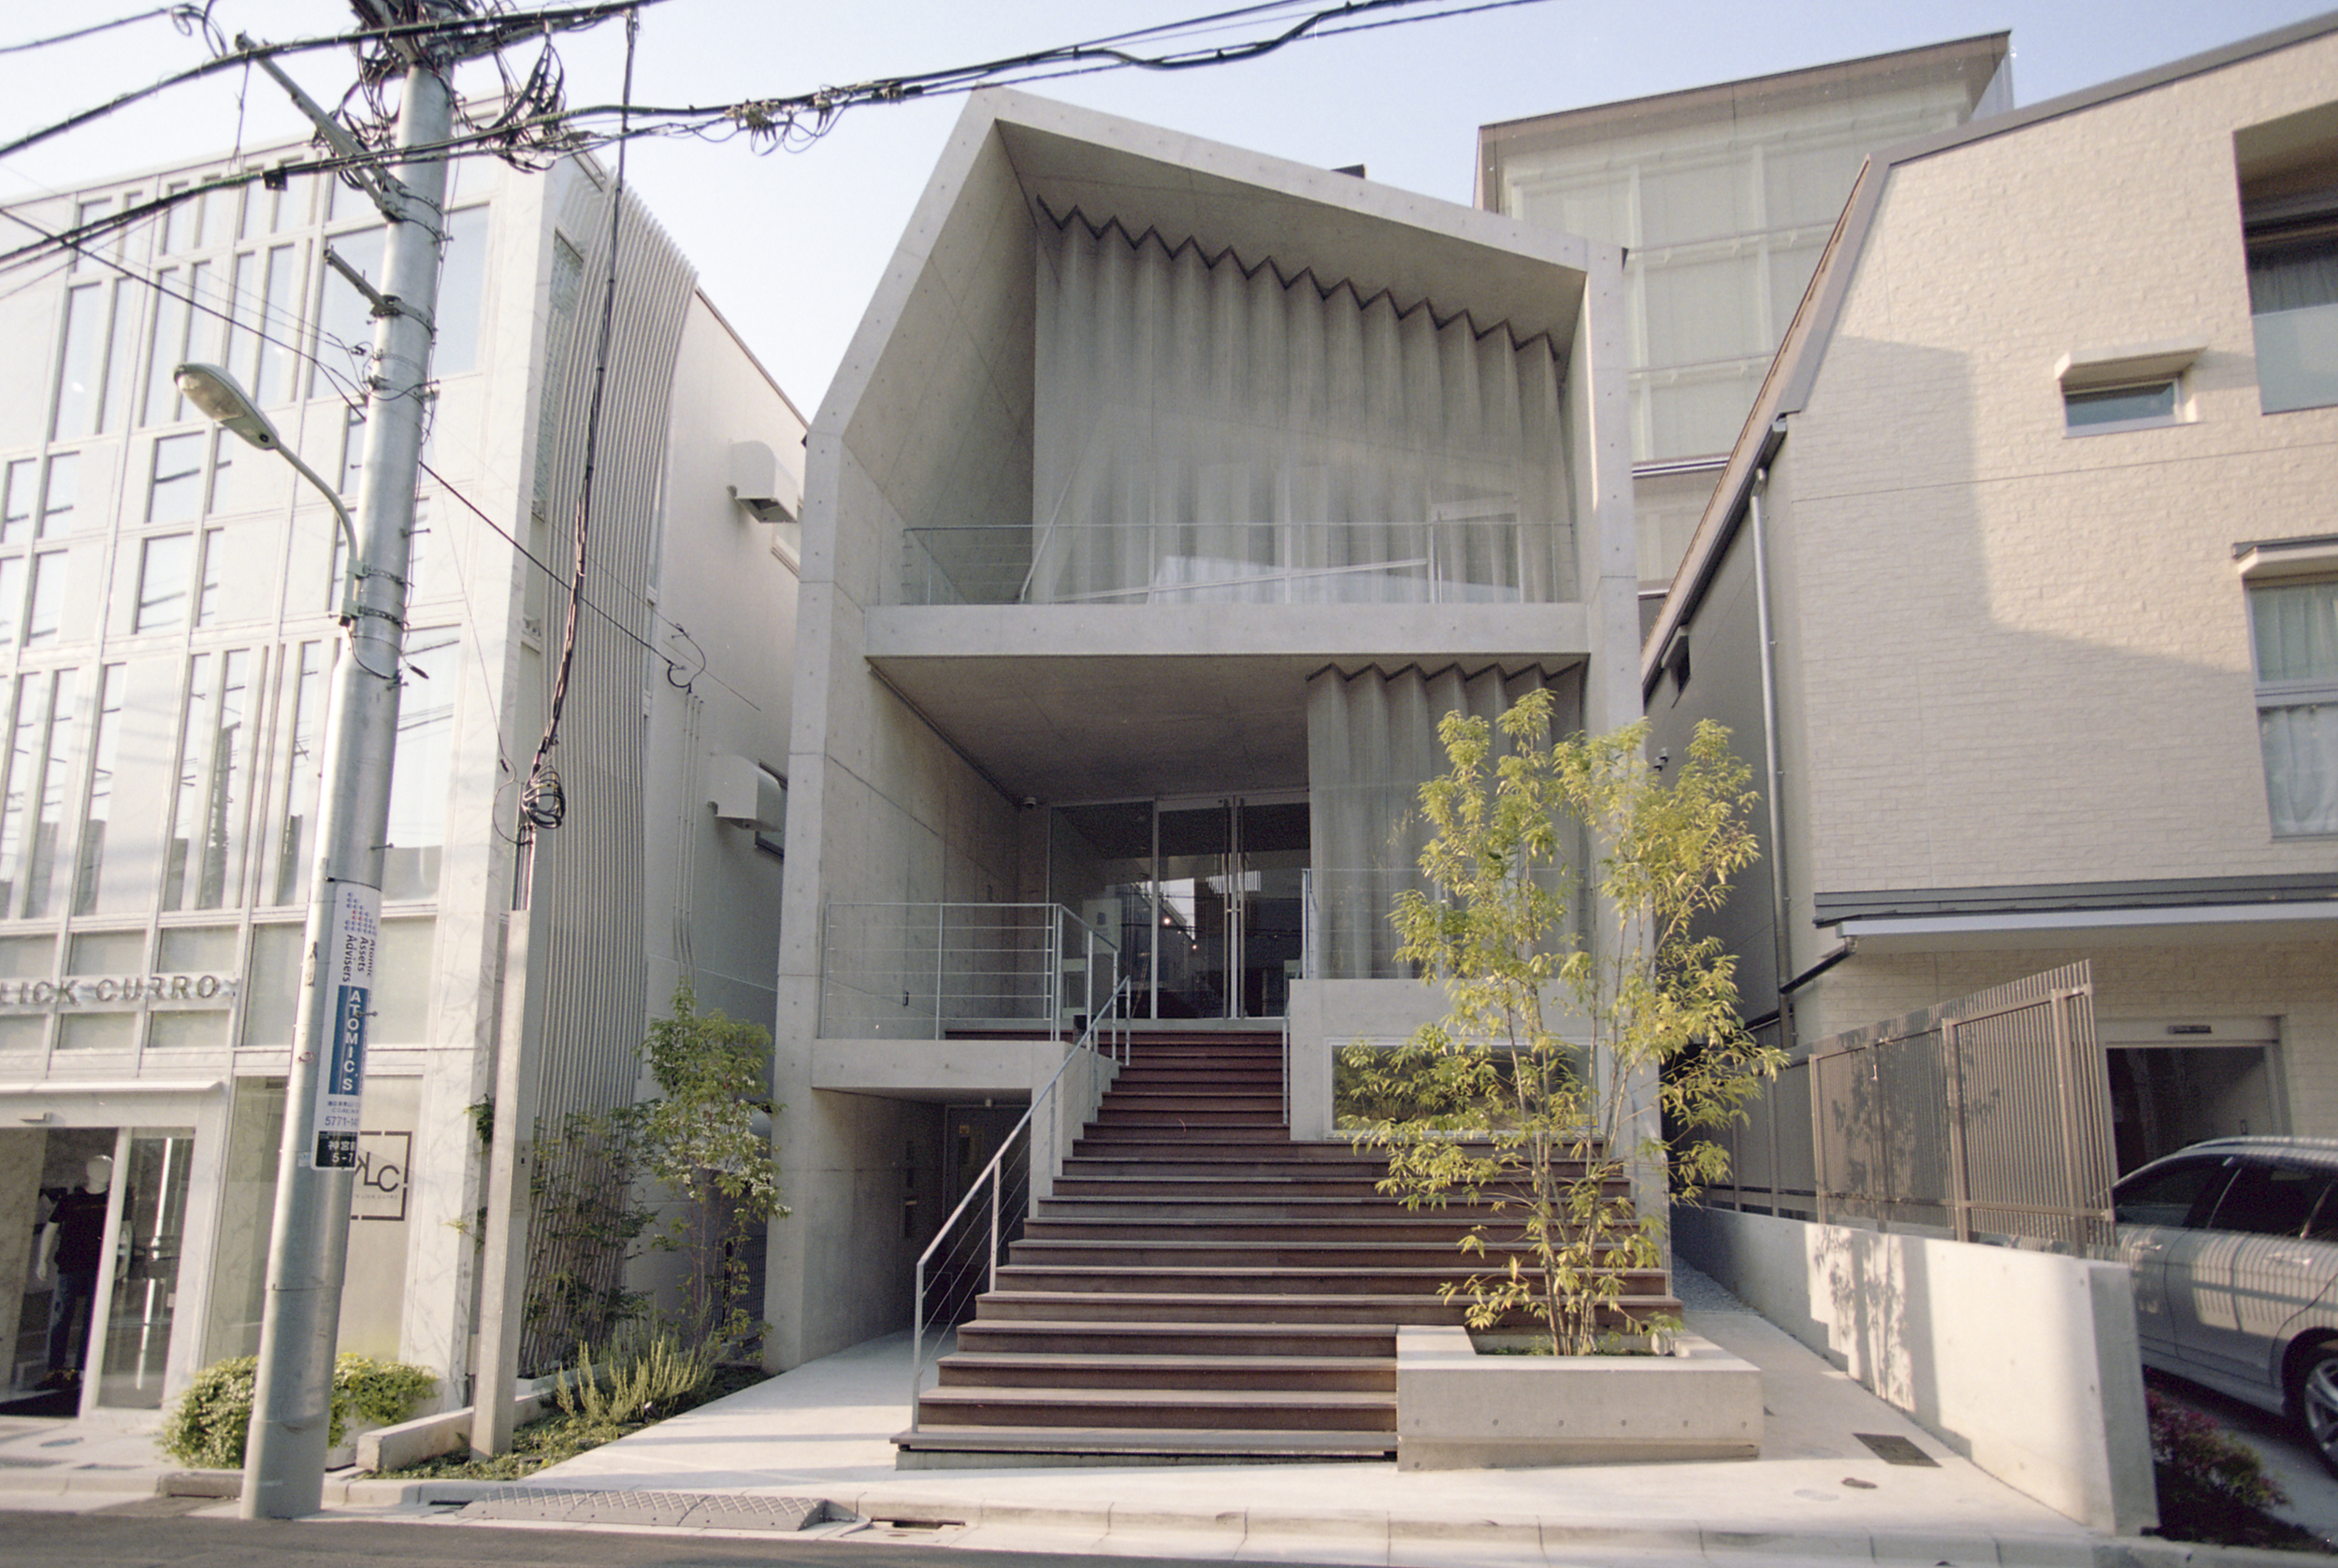 Omotesando Aoyama Area Guide When In Tokyo Tokyo S Art Design And Architecture Guide